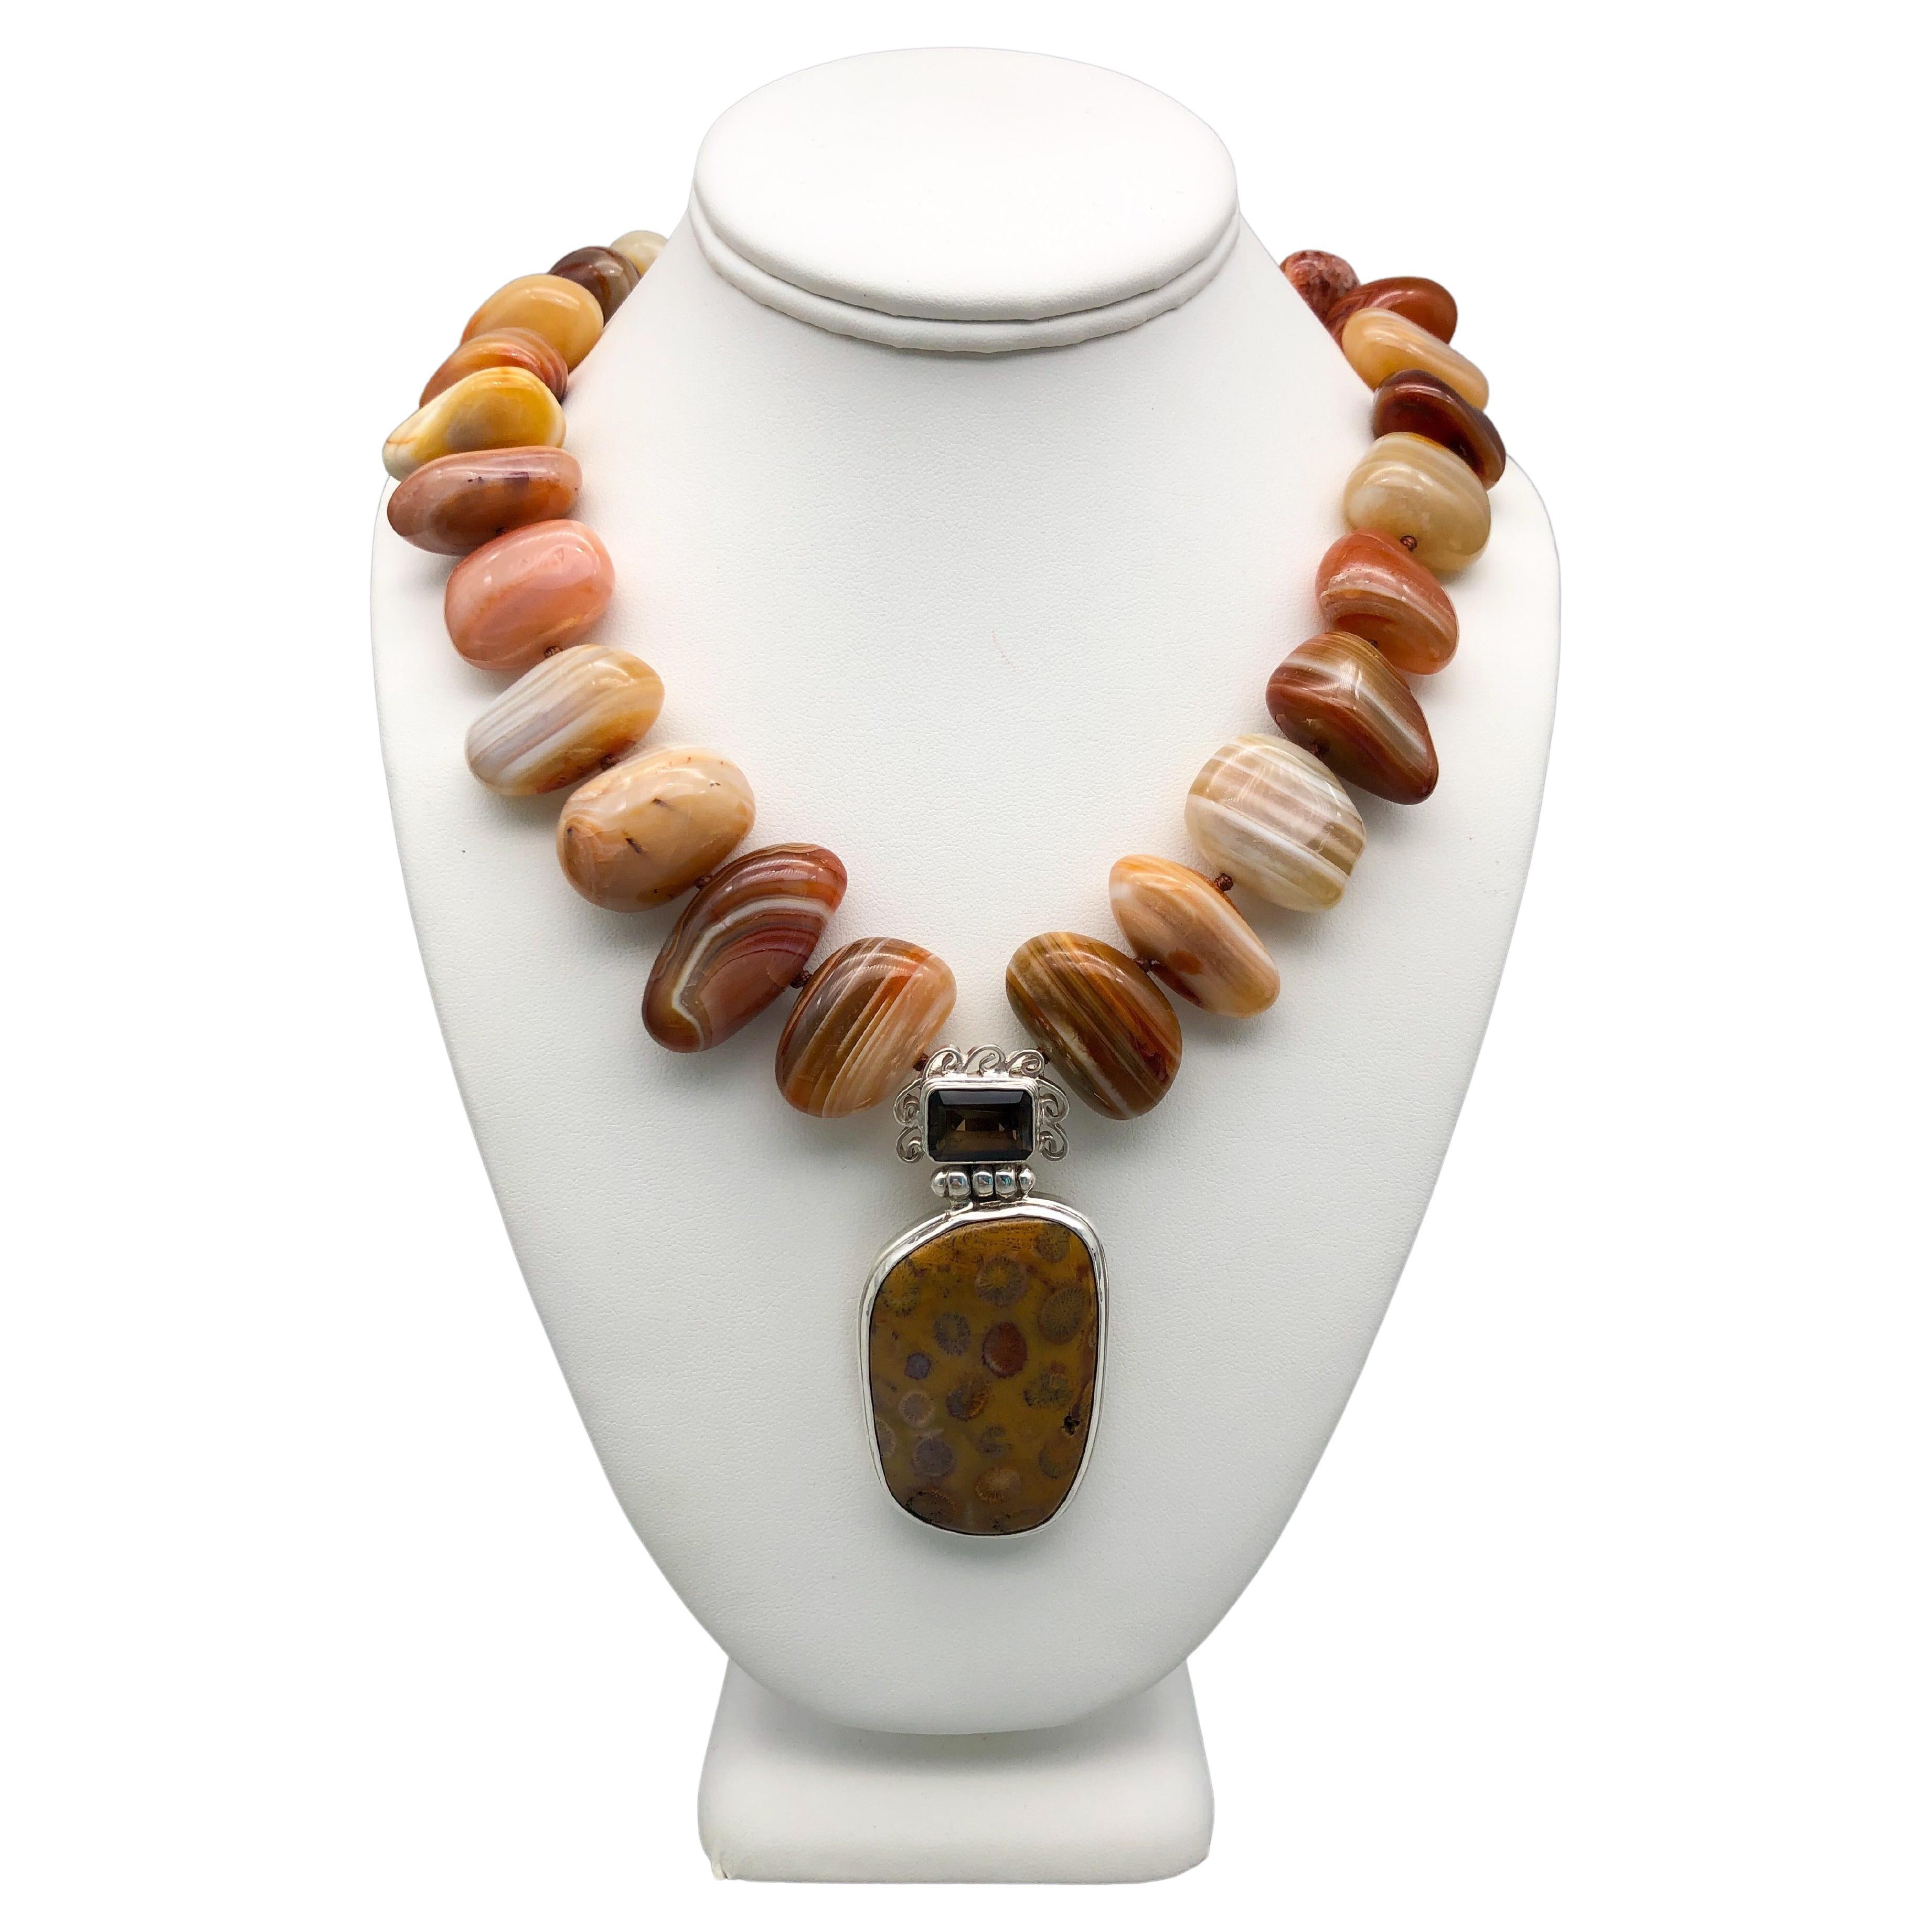 A.Jeschel Honey-colored striped Brazilian Agate pendant necklace. For Sale